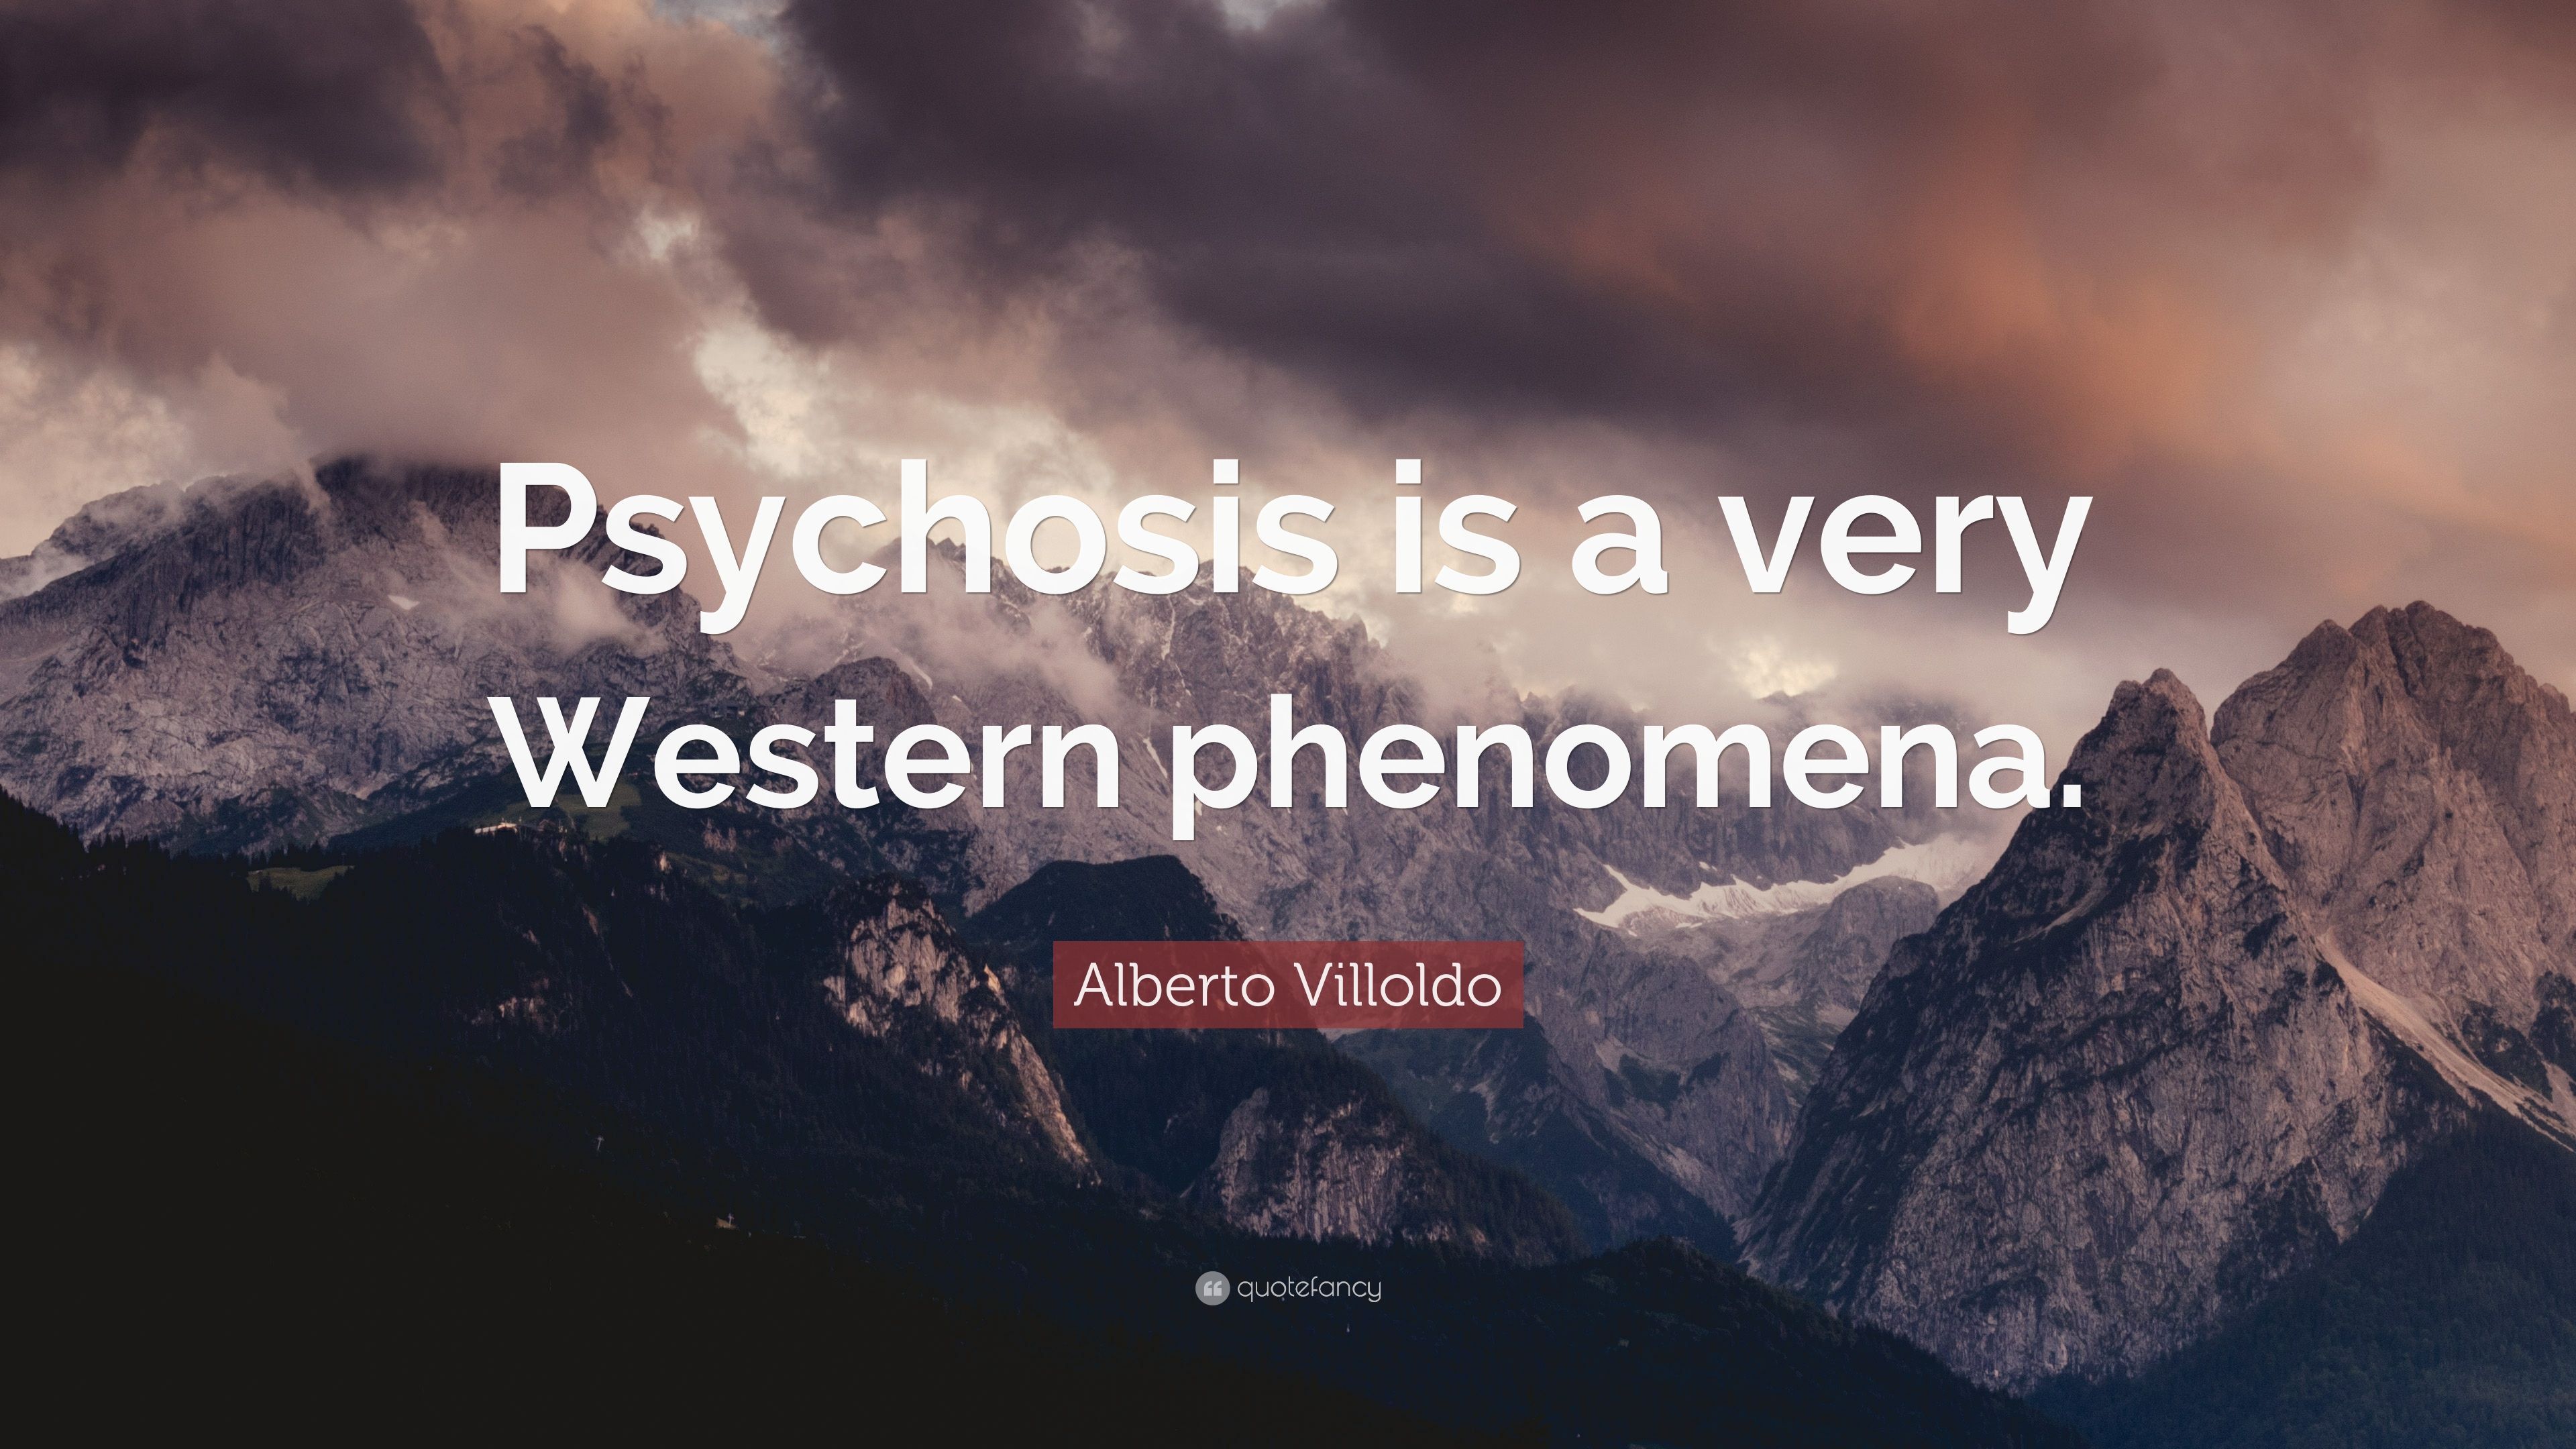 Alberto Villoldo Quote: “Psychosis is a very Western phenomena